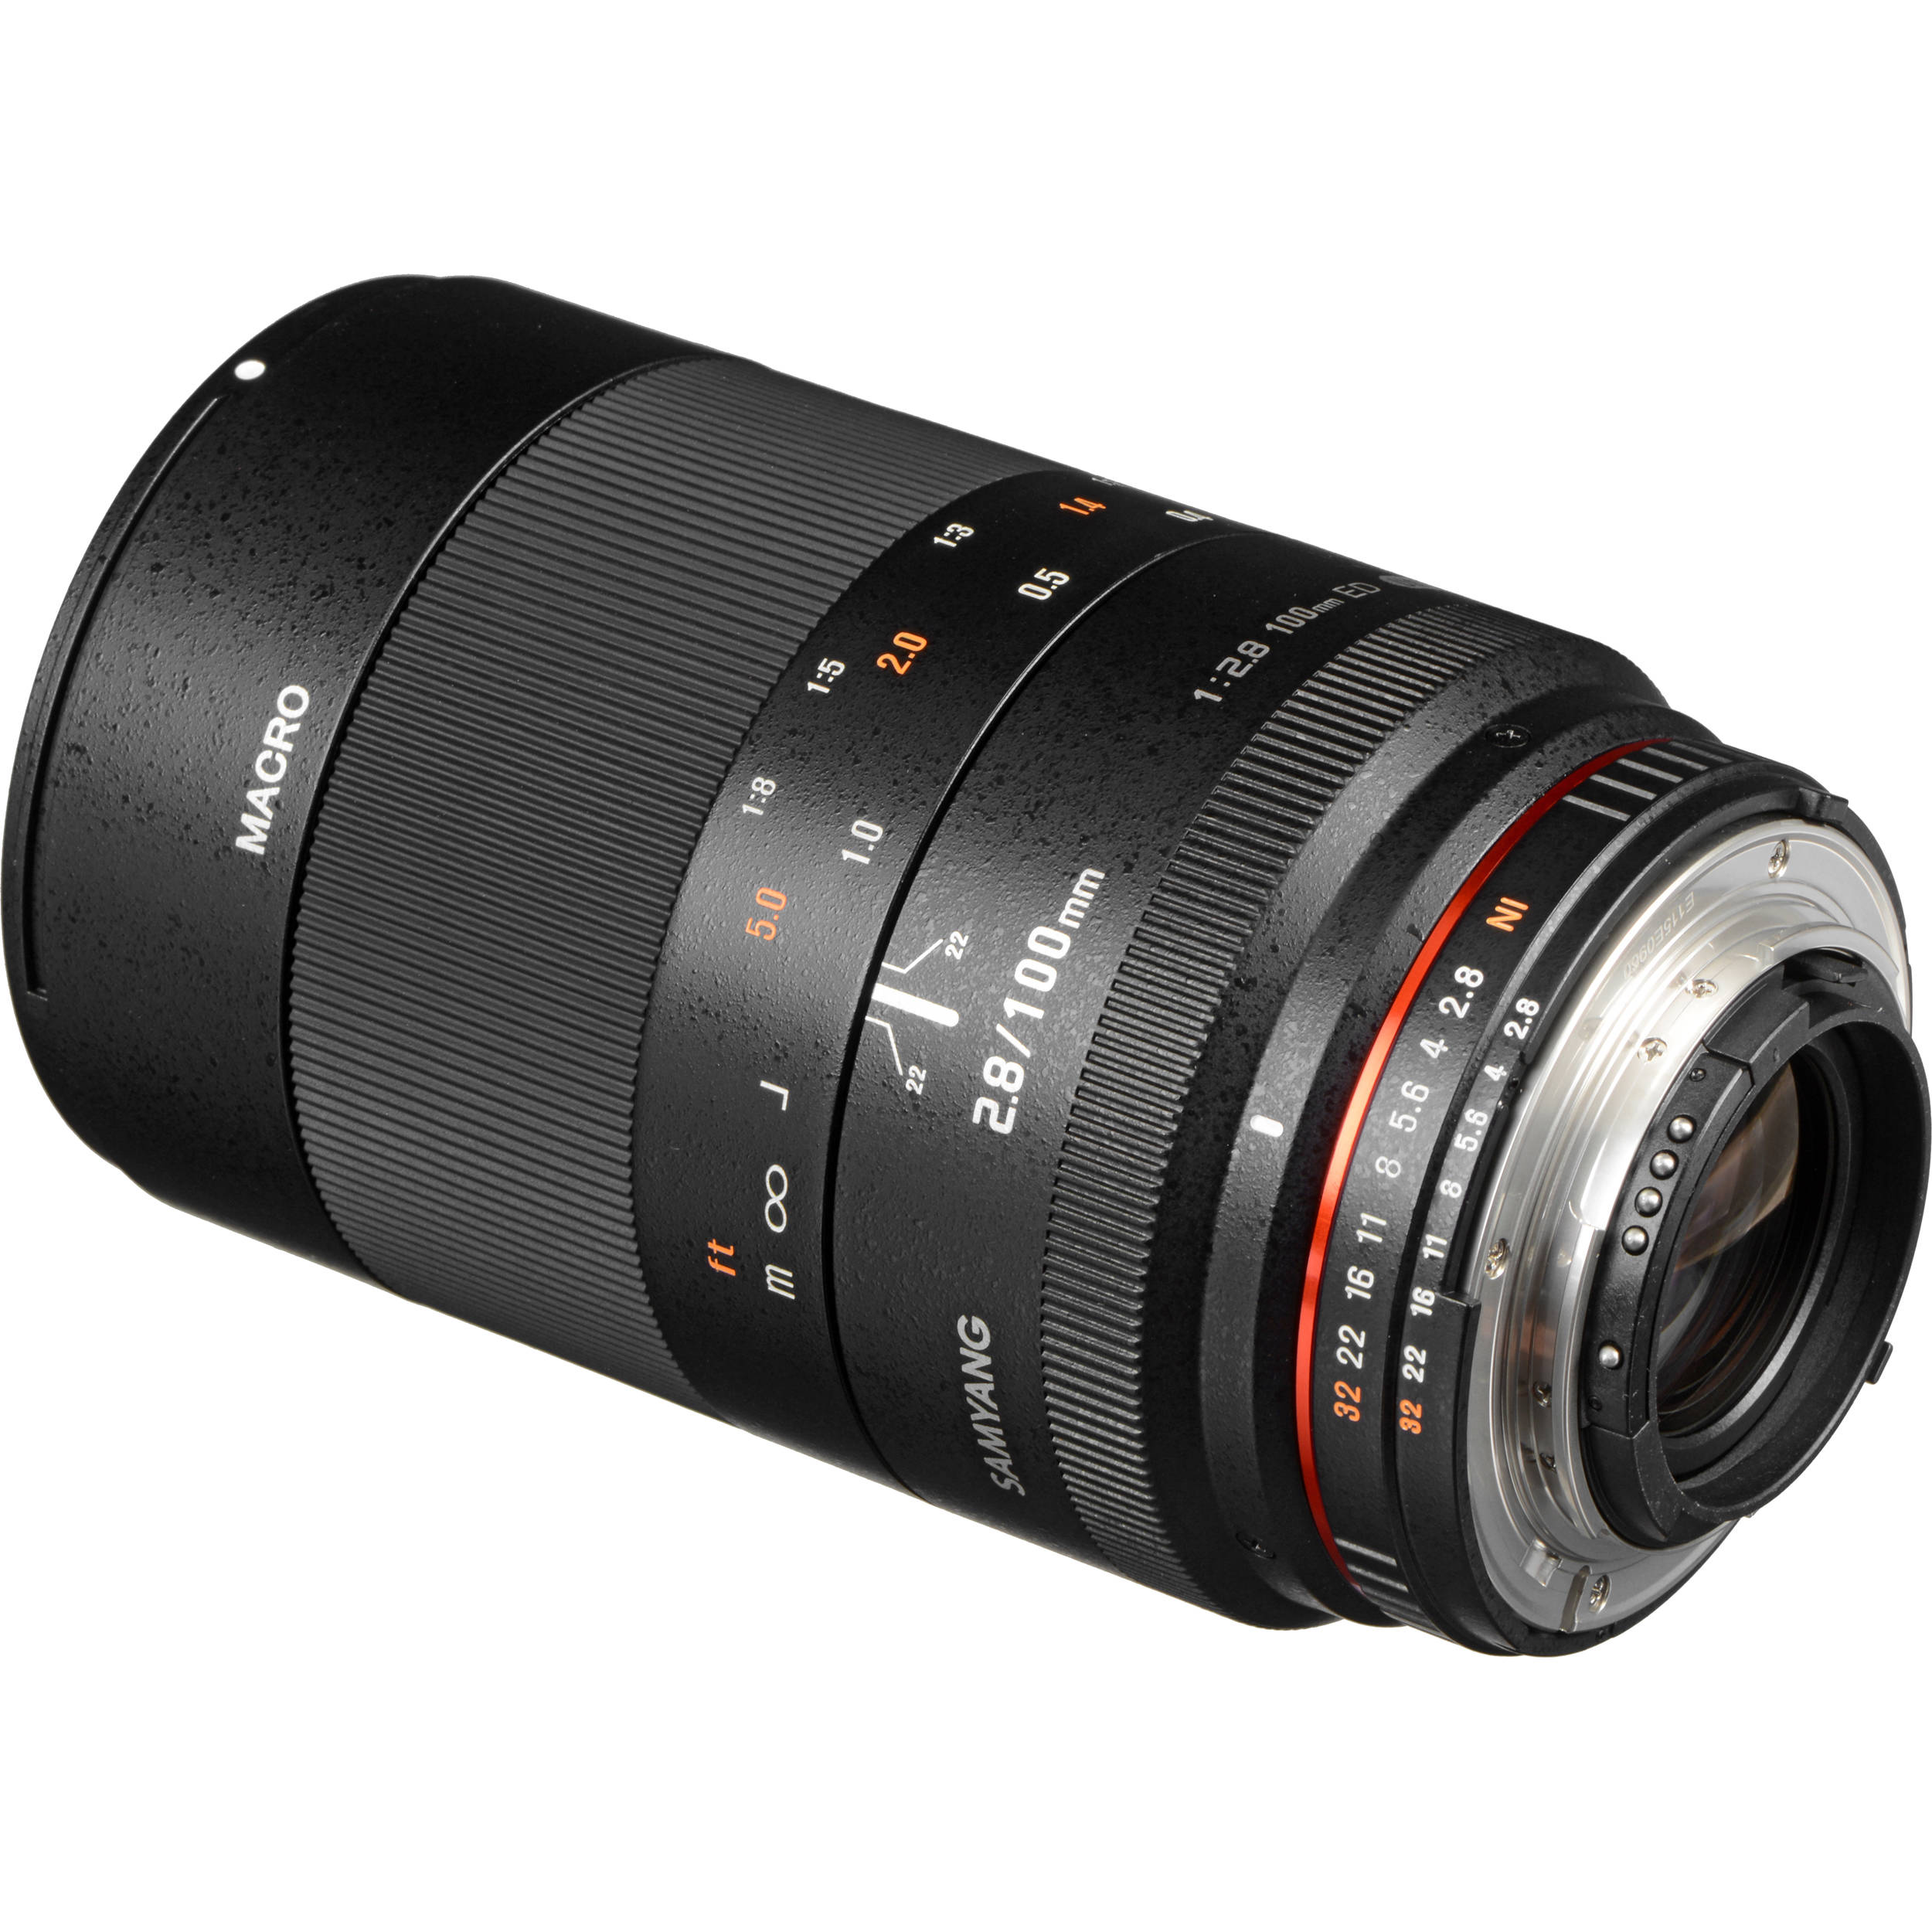 Samyang 100mm F 2 8 Ed Umc Macro Lens For Nikon F Sy100m N B H